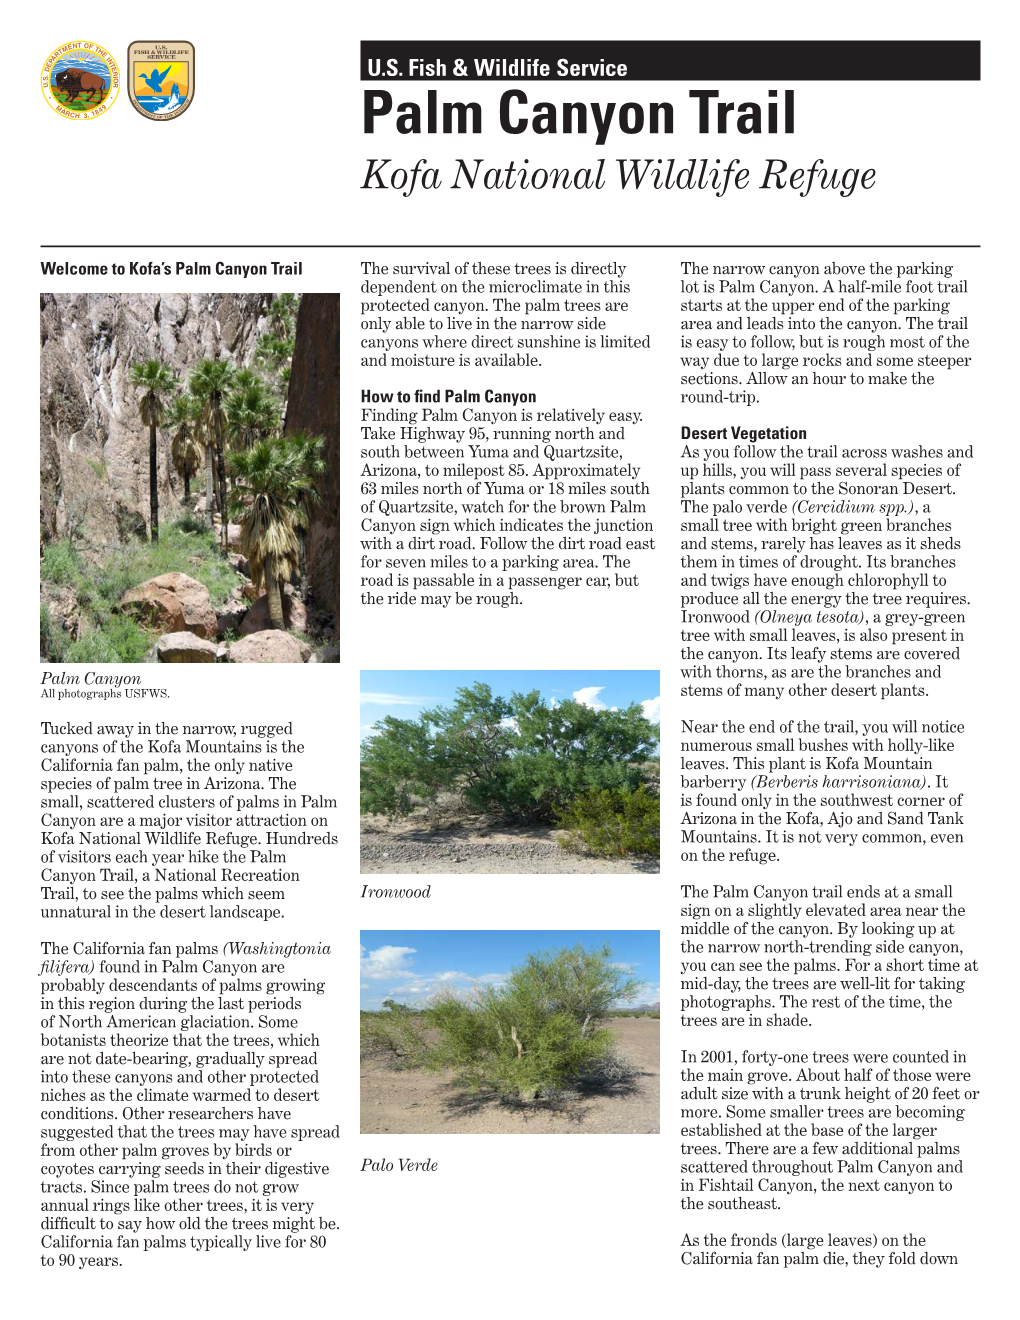 Palm Canyon Trail Kofa National Wildlife Refuge